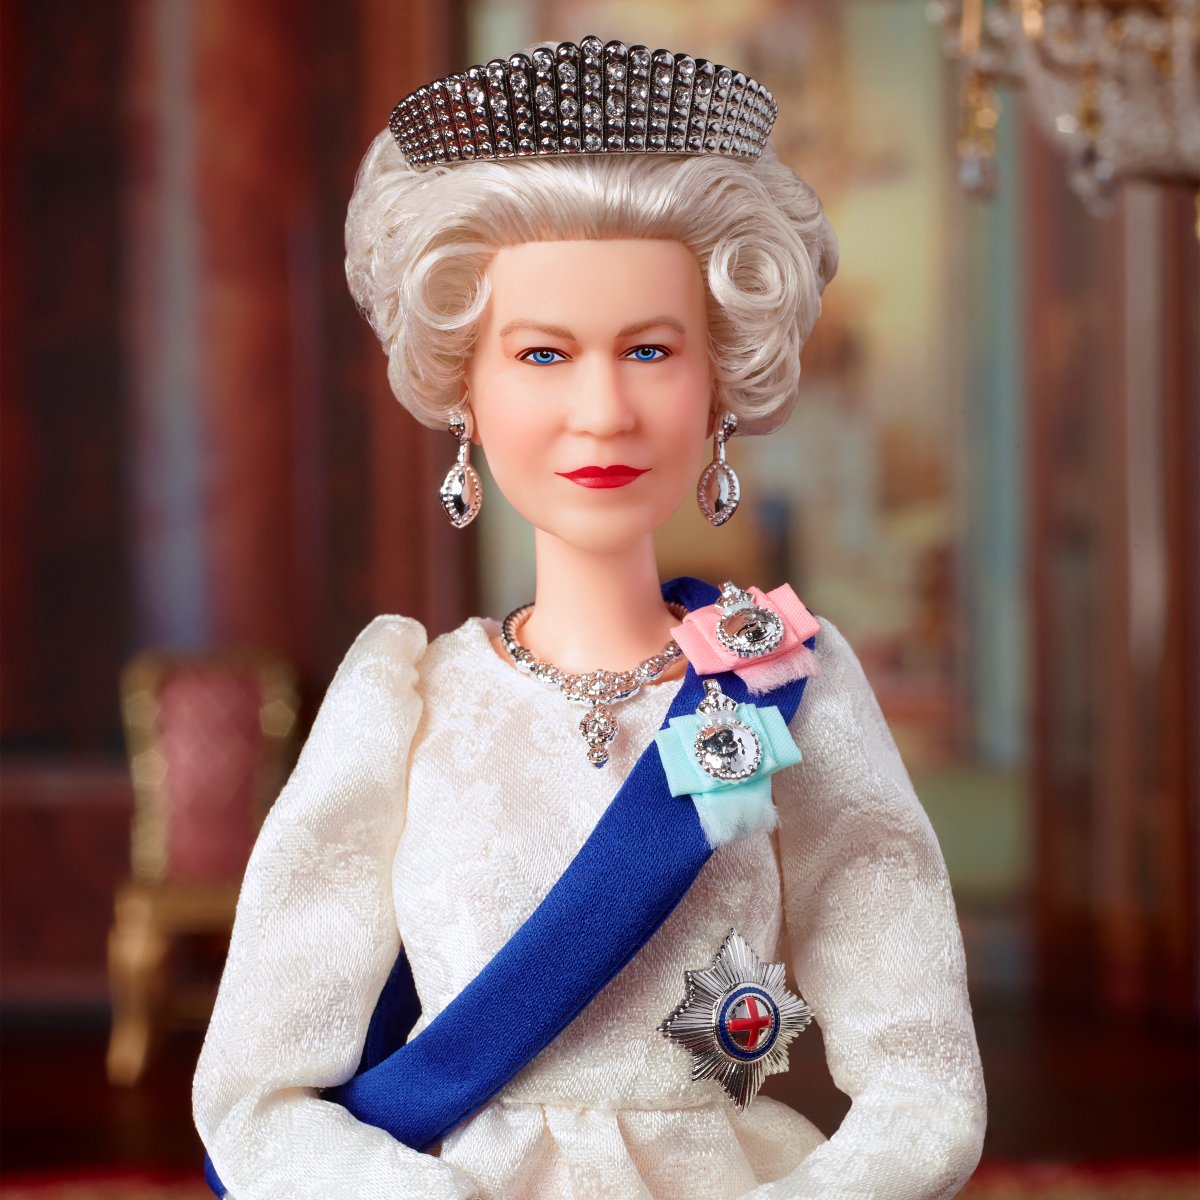 Doll designed for Queen Elizabeth's 96th birthday #3